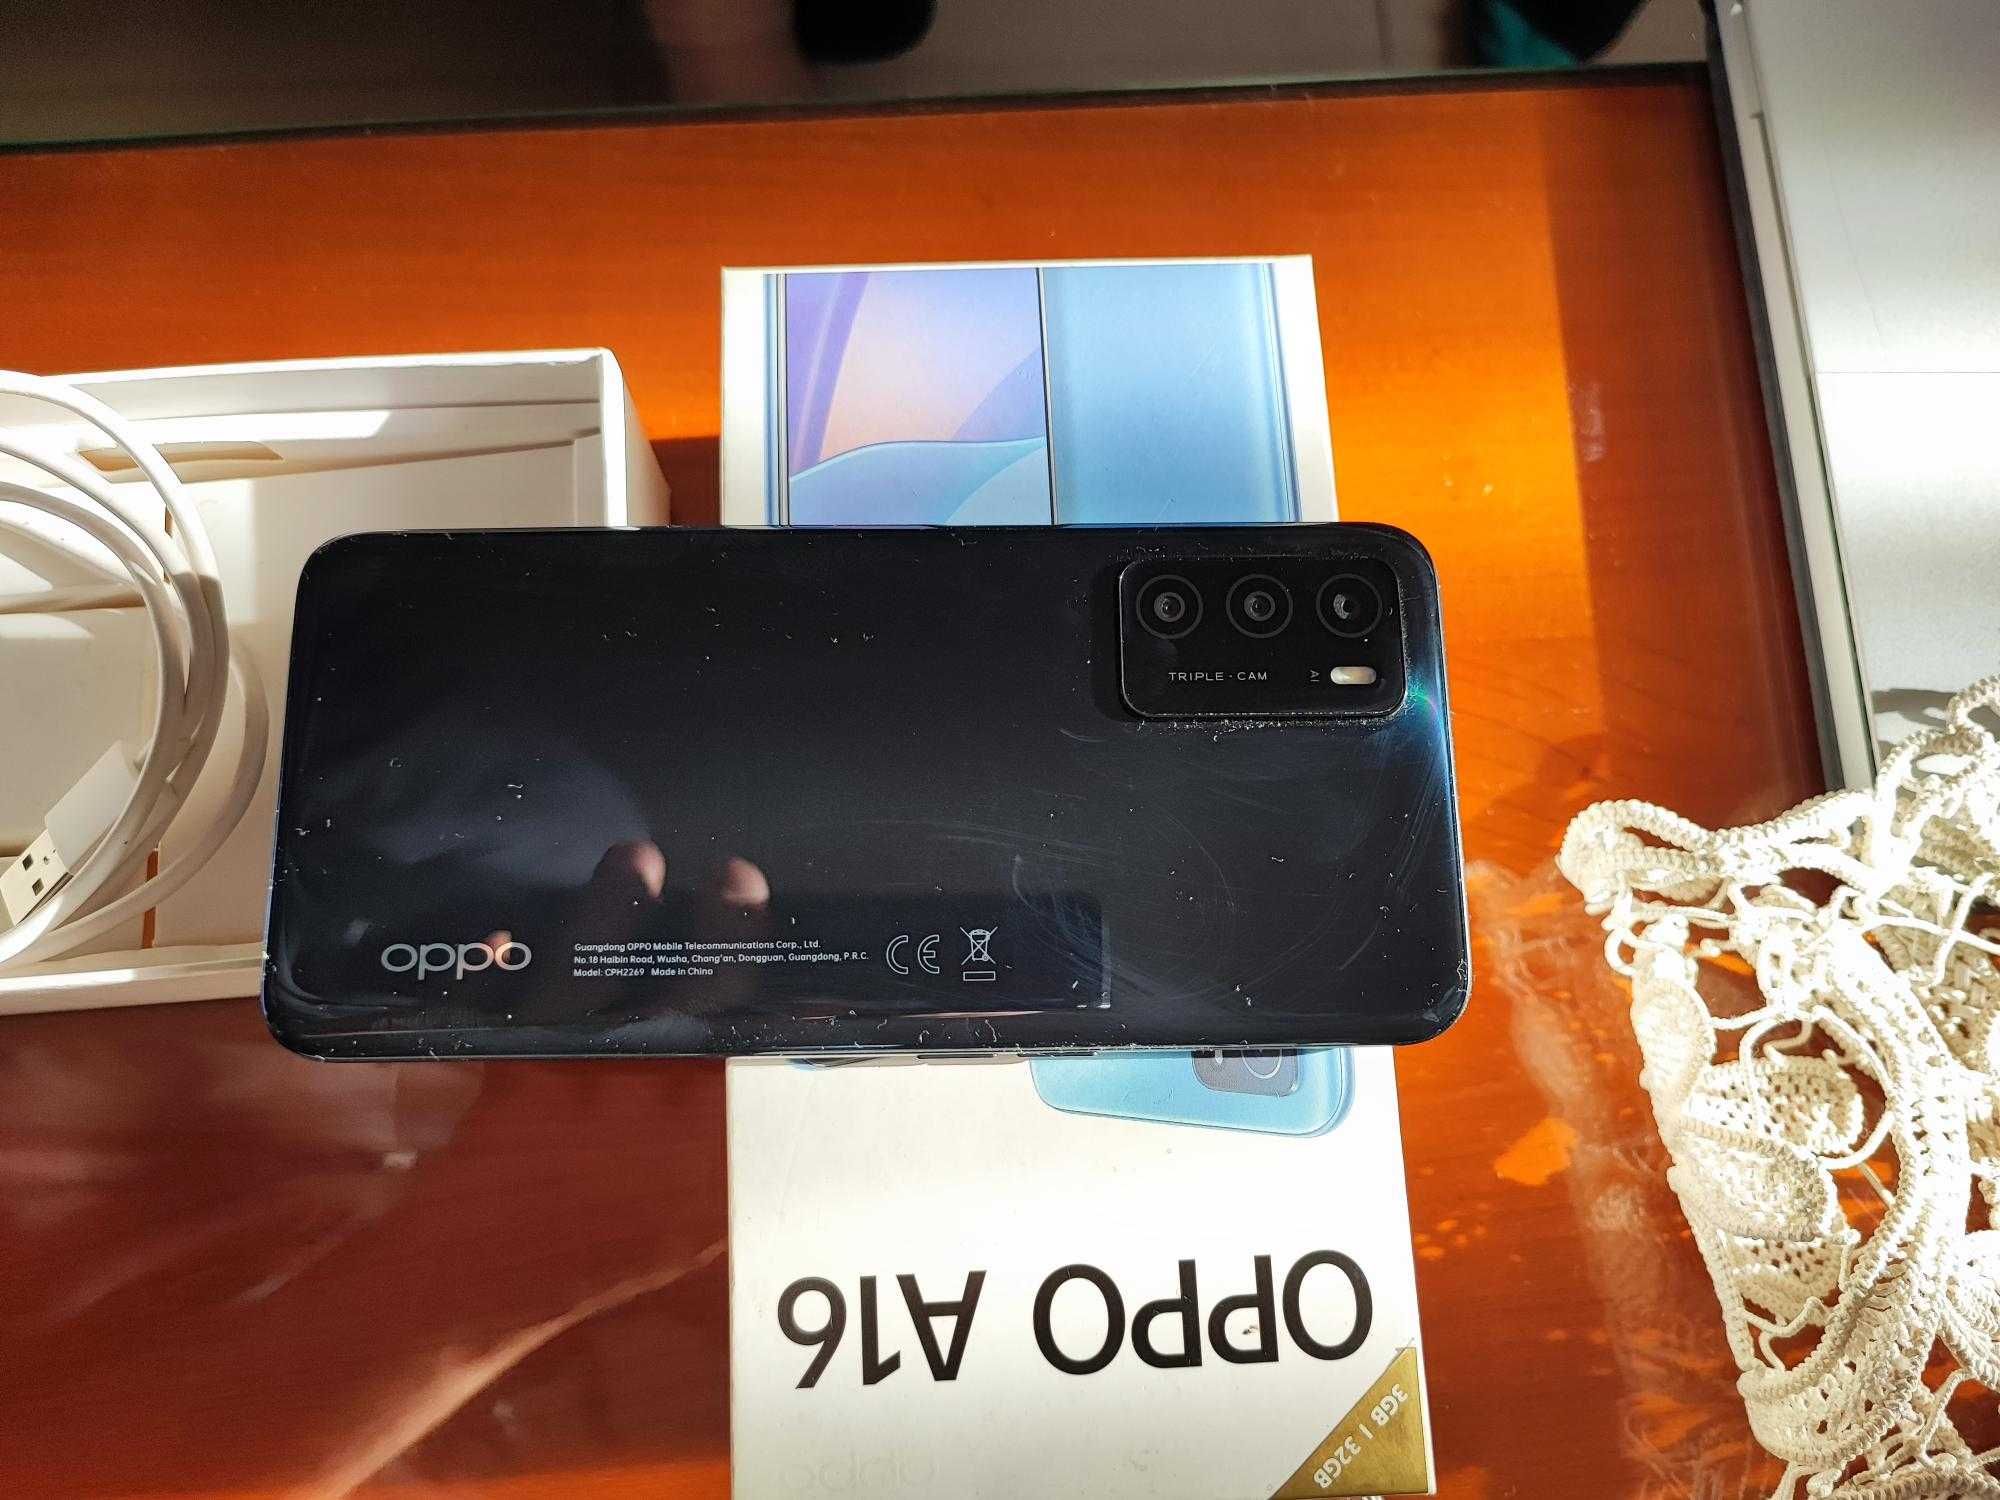 OPPO A16 3GB/32GB ca si nou, husa + protectie de ecran